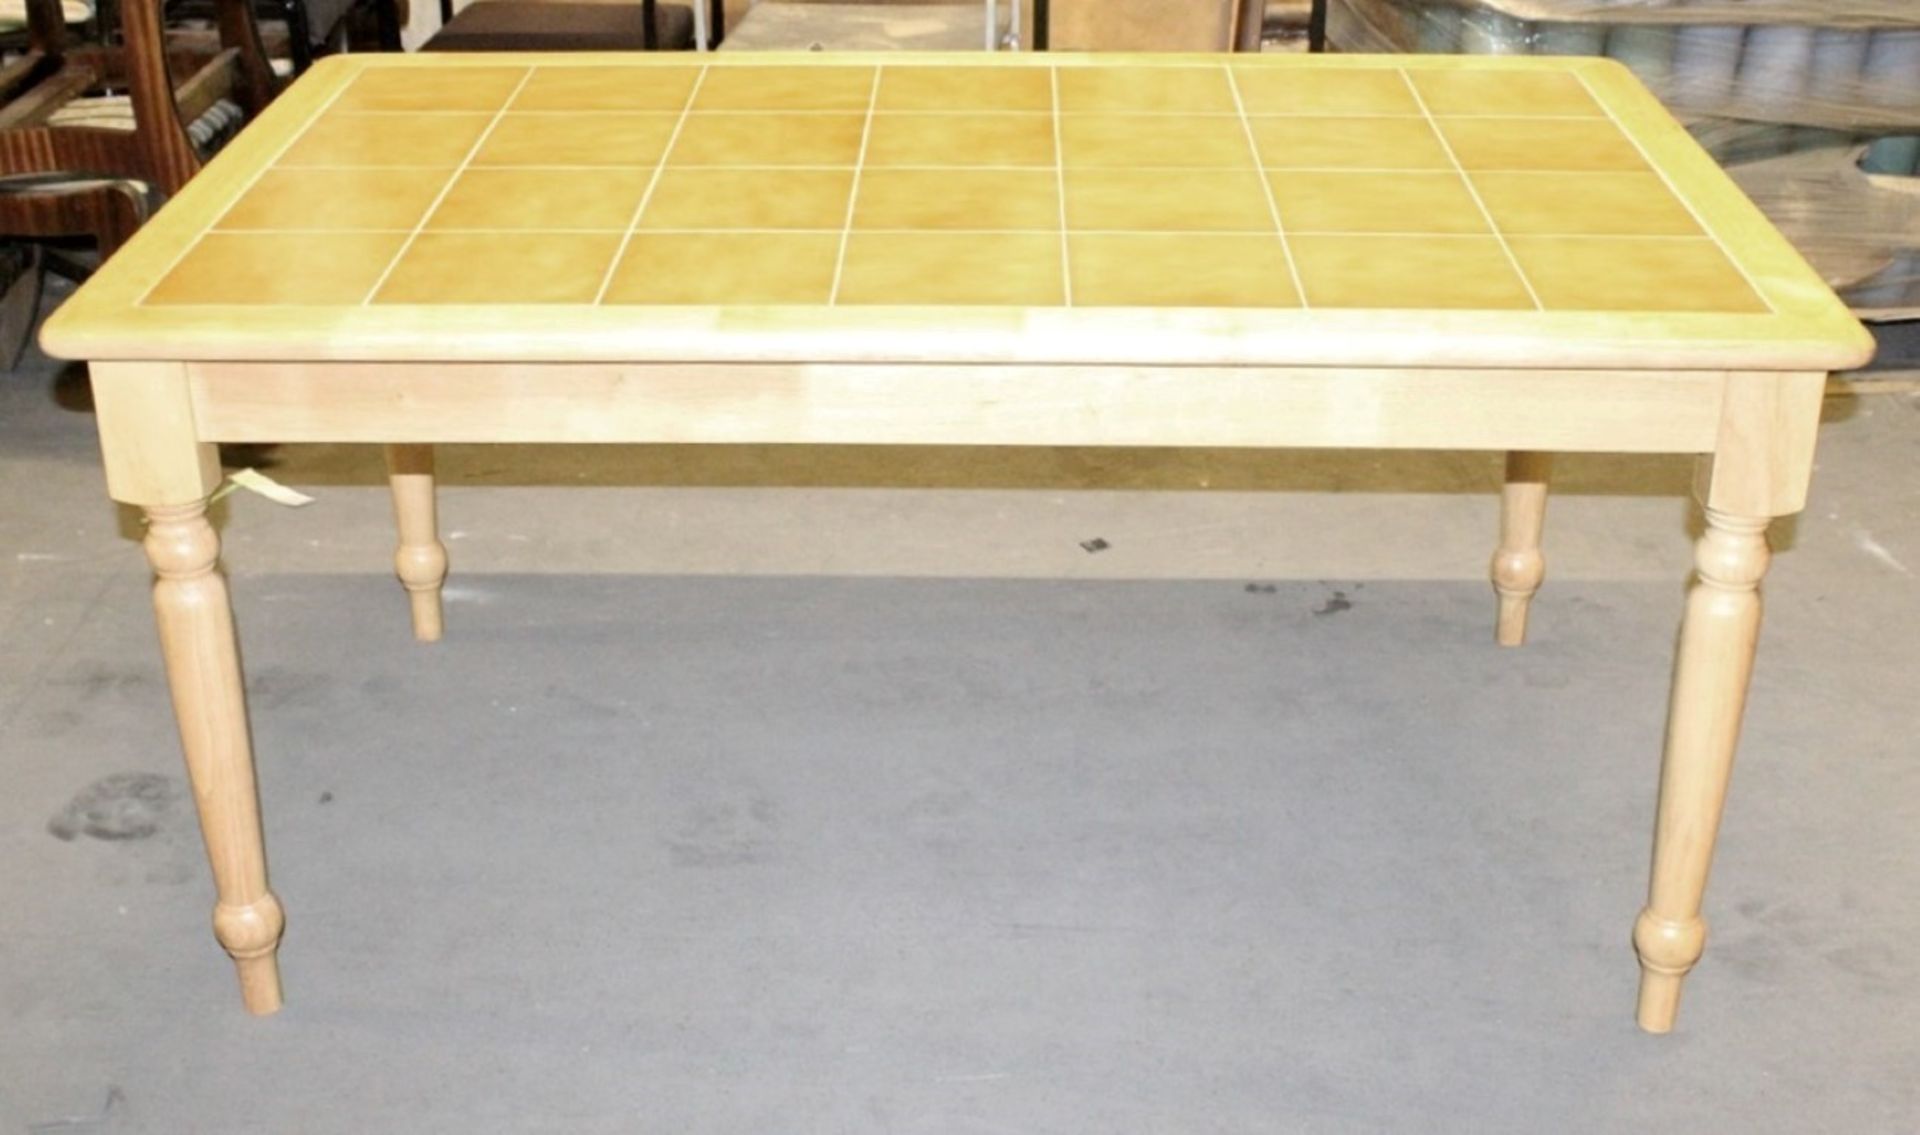 1 x Tile Top Light Oak Table - 154 x 94cm - Prebuilt, In Excellent Condition – Ref: JSB120 - Current - Image 2 of 5